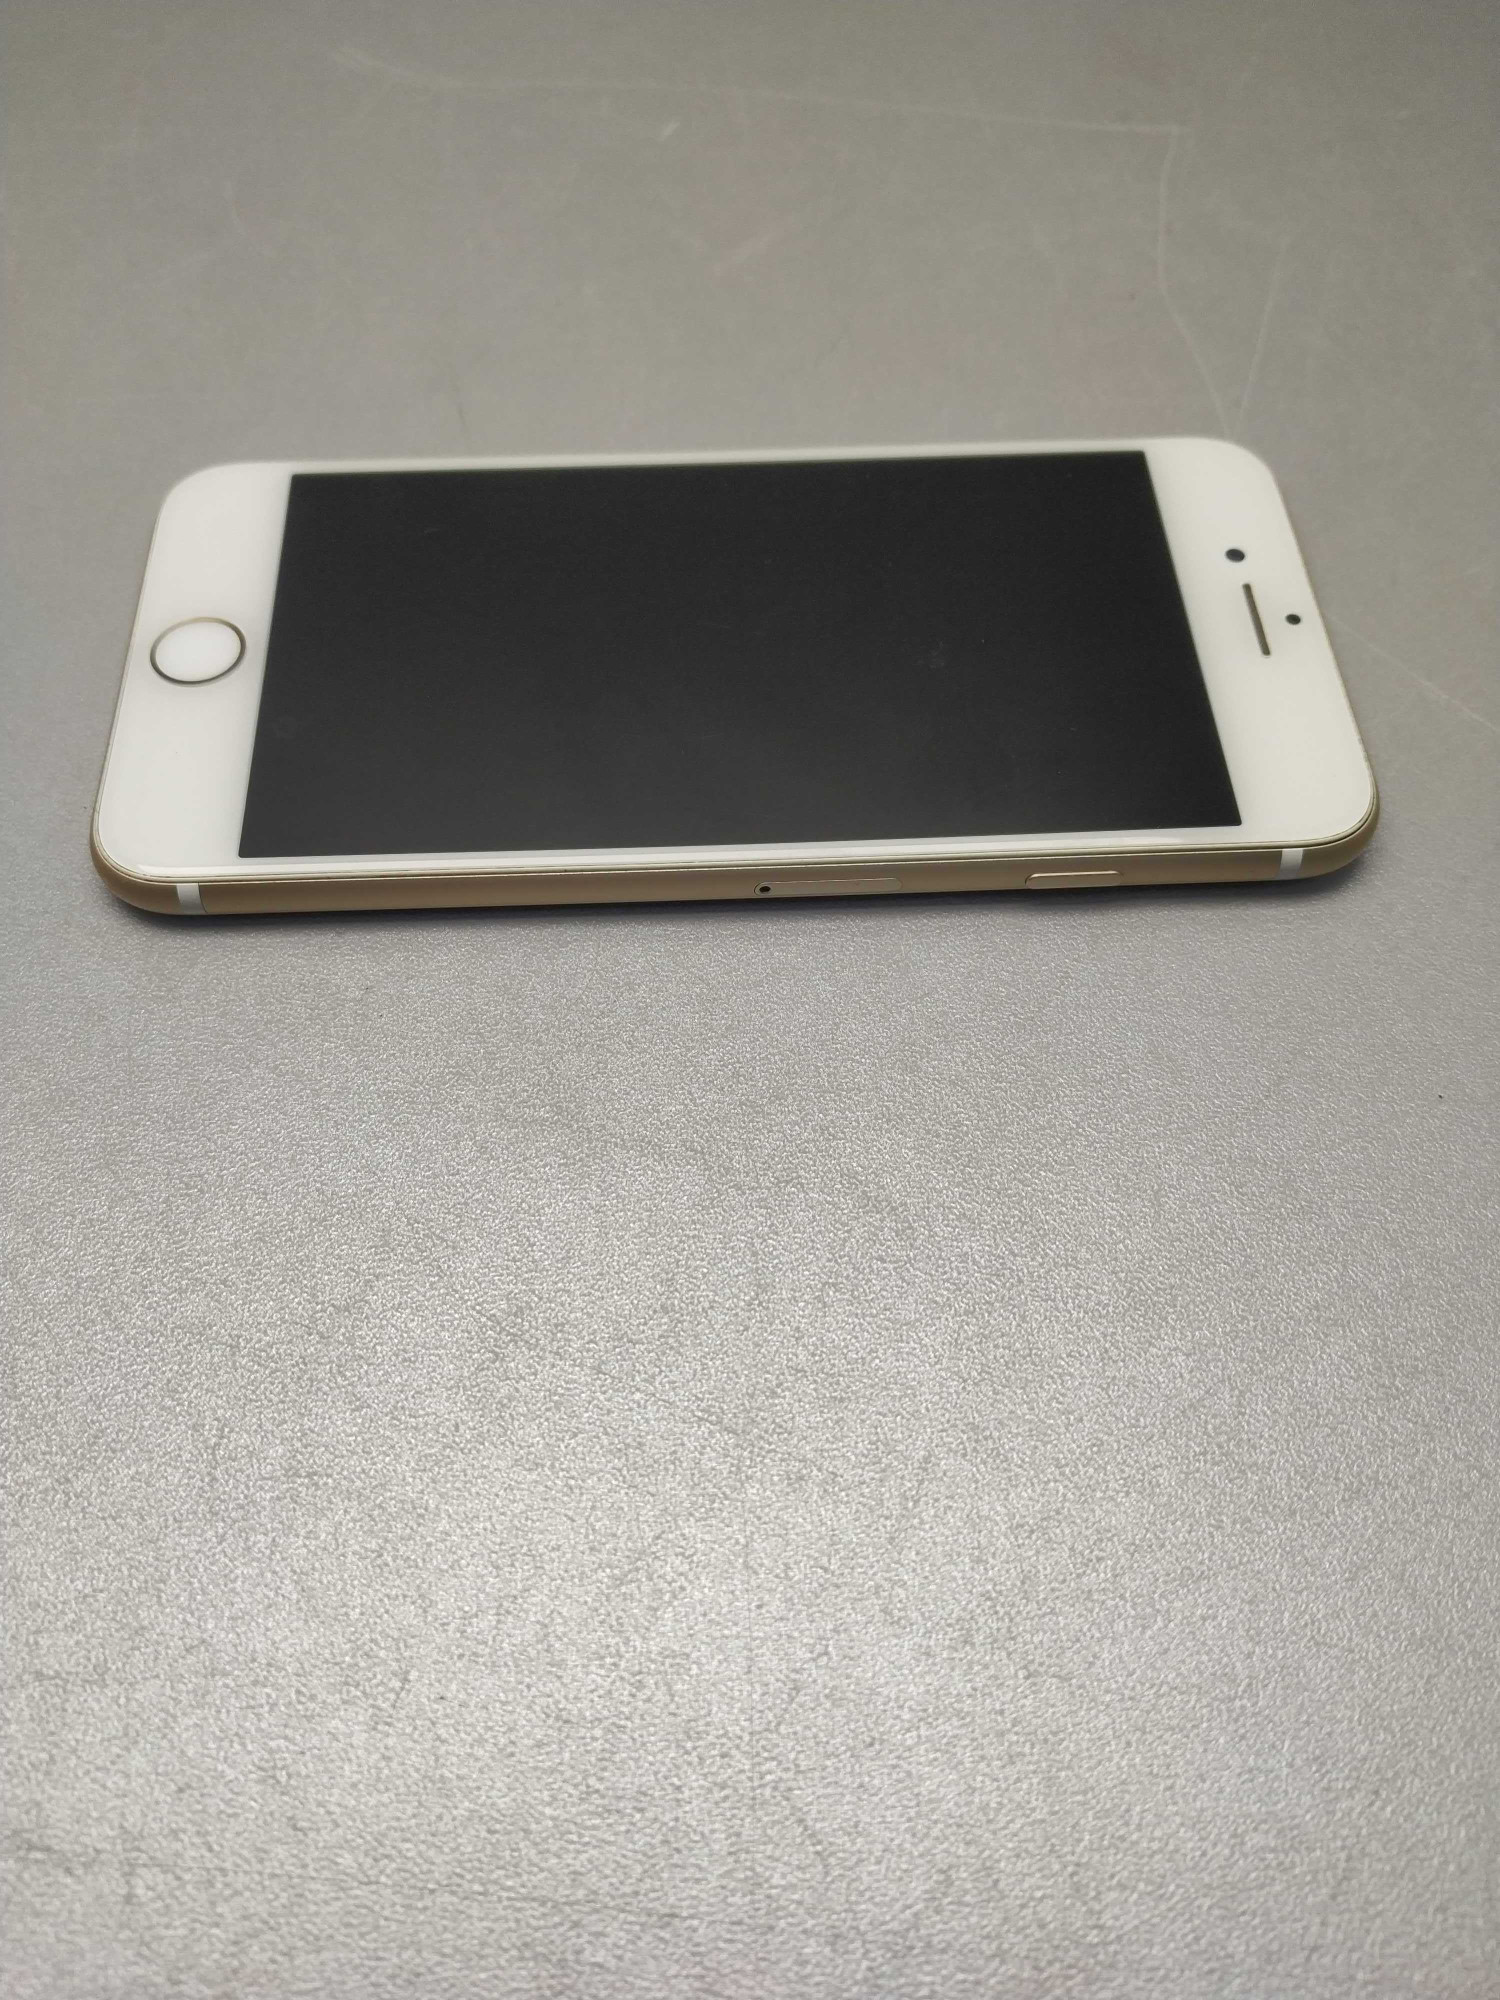 Apple iPhone 7 128Gb Gold (MN942) 15